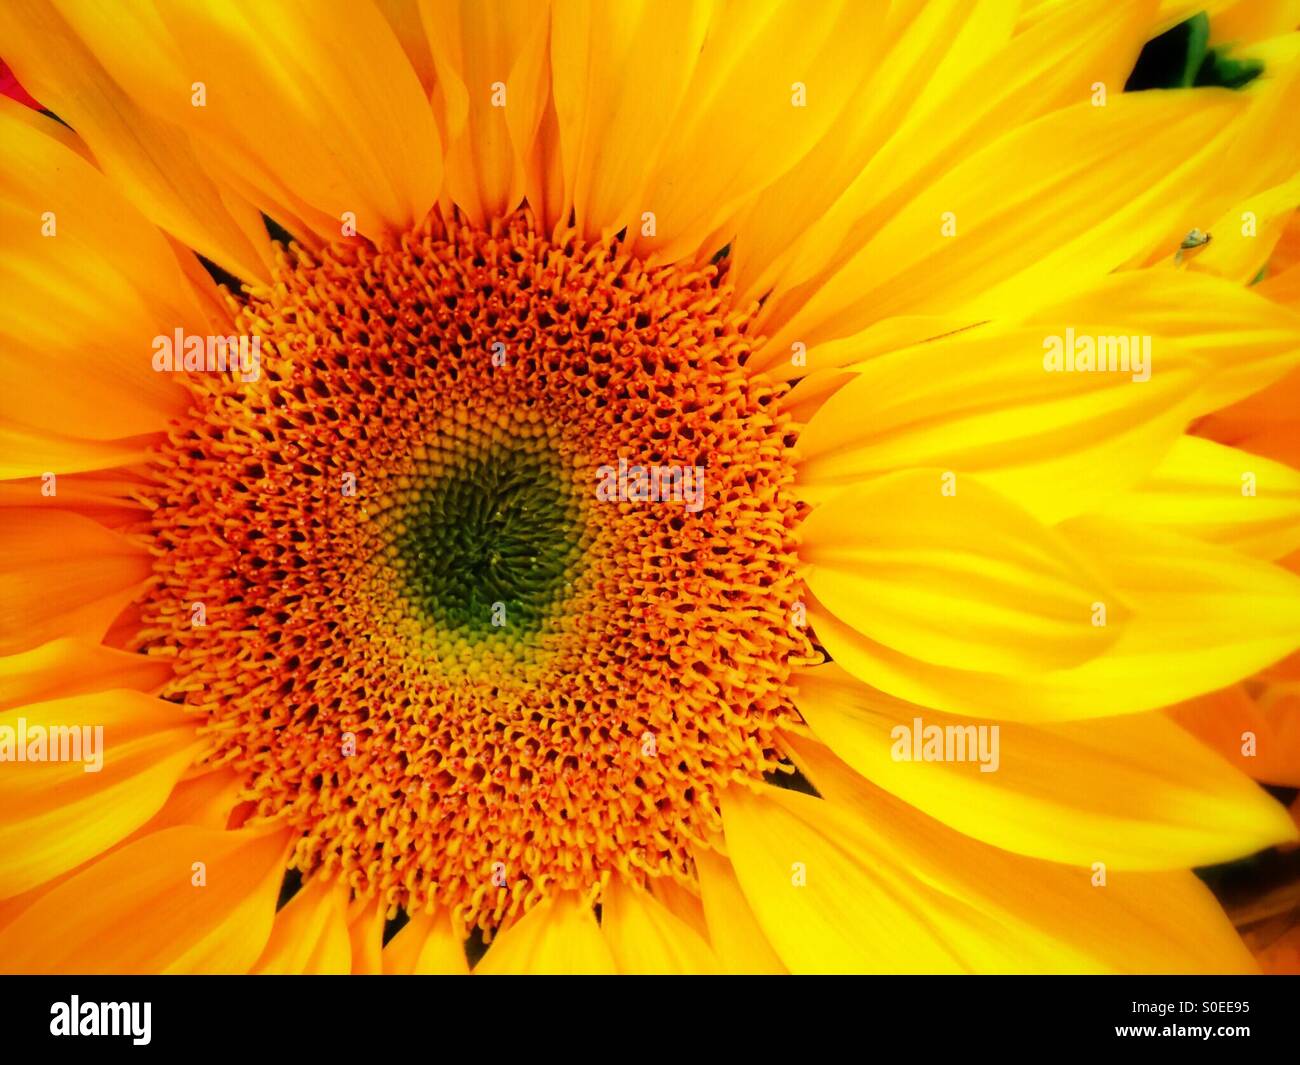 A yellow sunflower Stock Photo